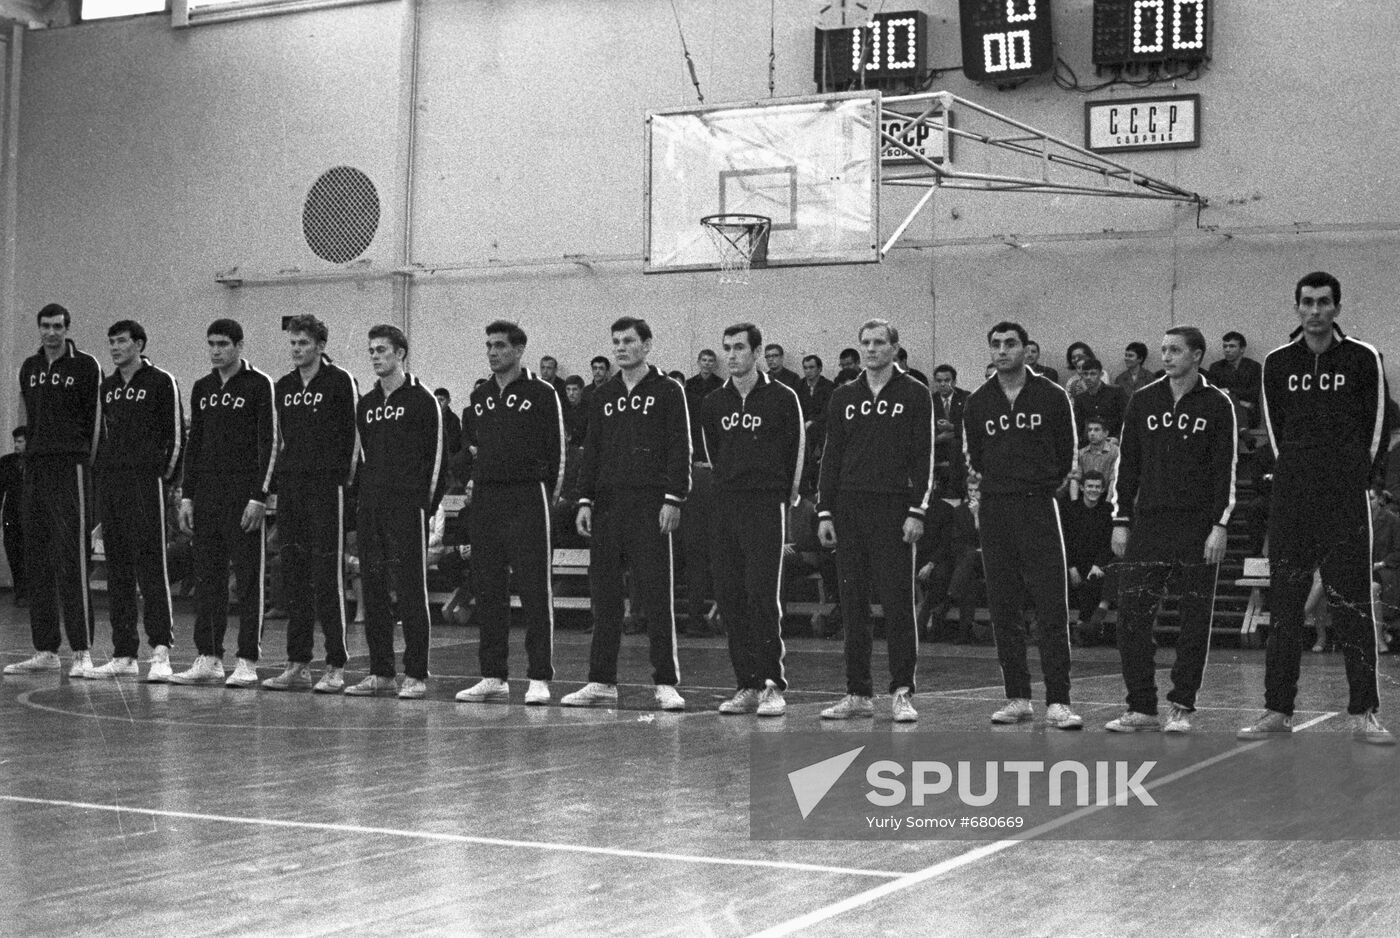 USSR basketball team